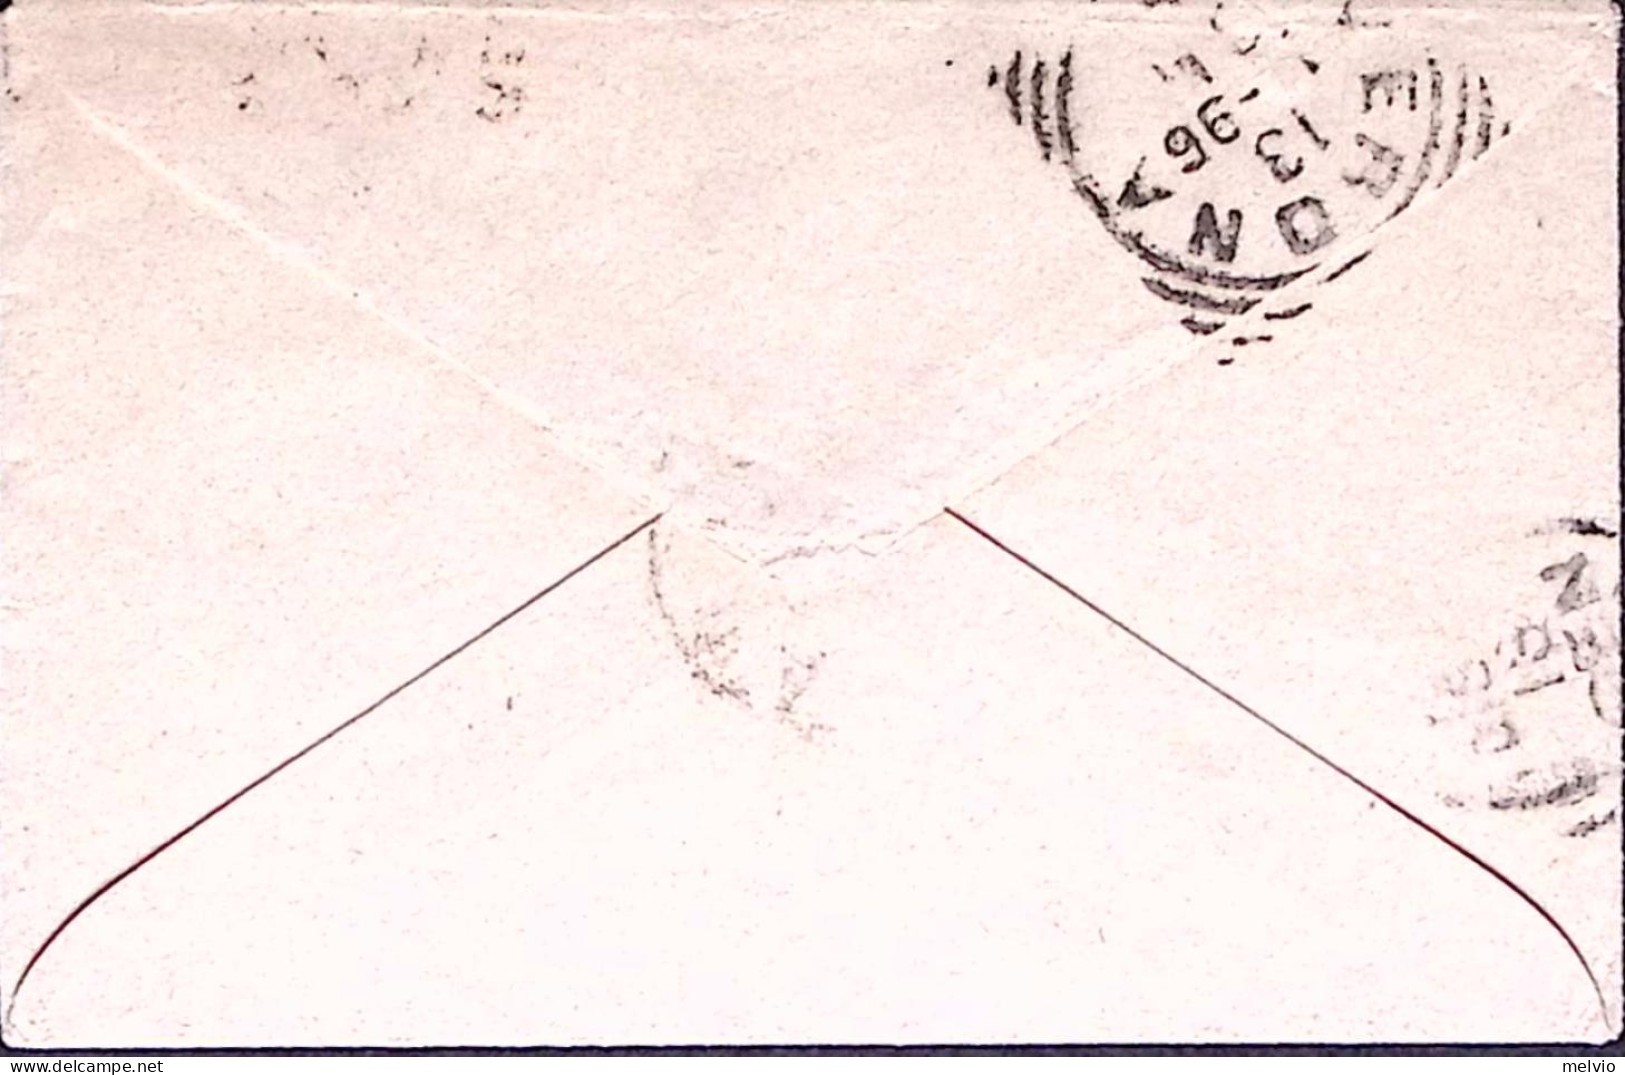 1896-RUBBIERA C1 (12.1) Su Busta Affrancata Effigie C.20 - Marcophilie